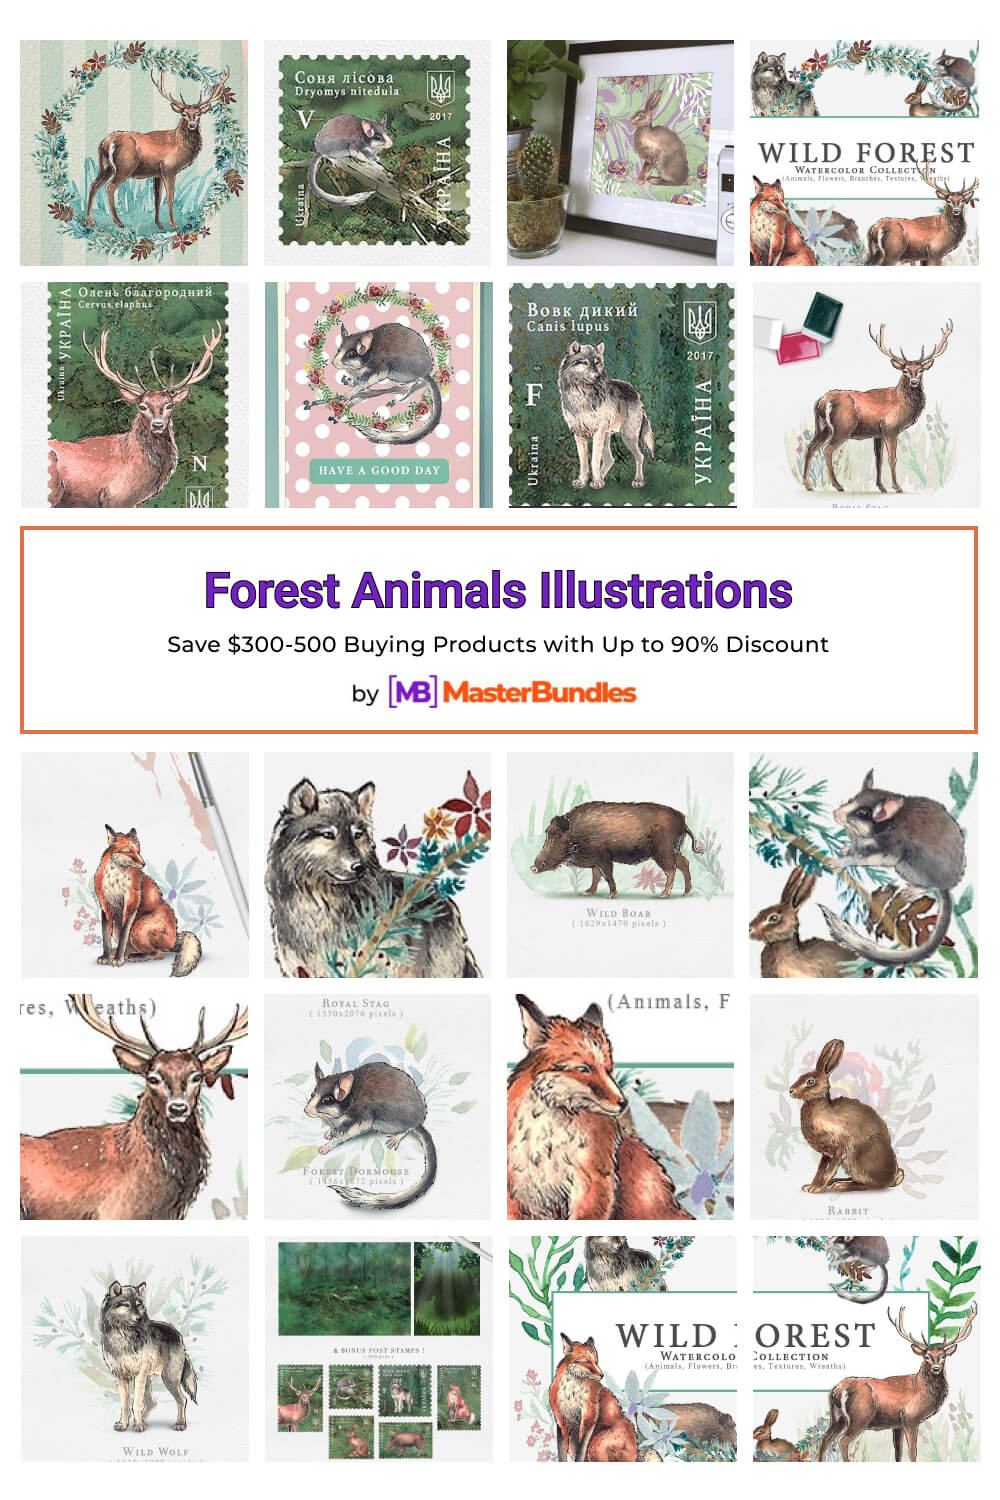 forest animals illustrations pinterest image.